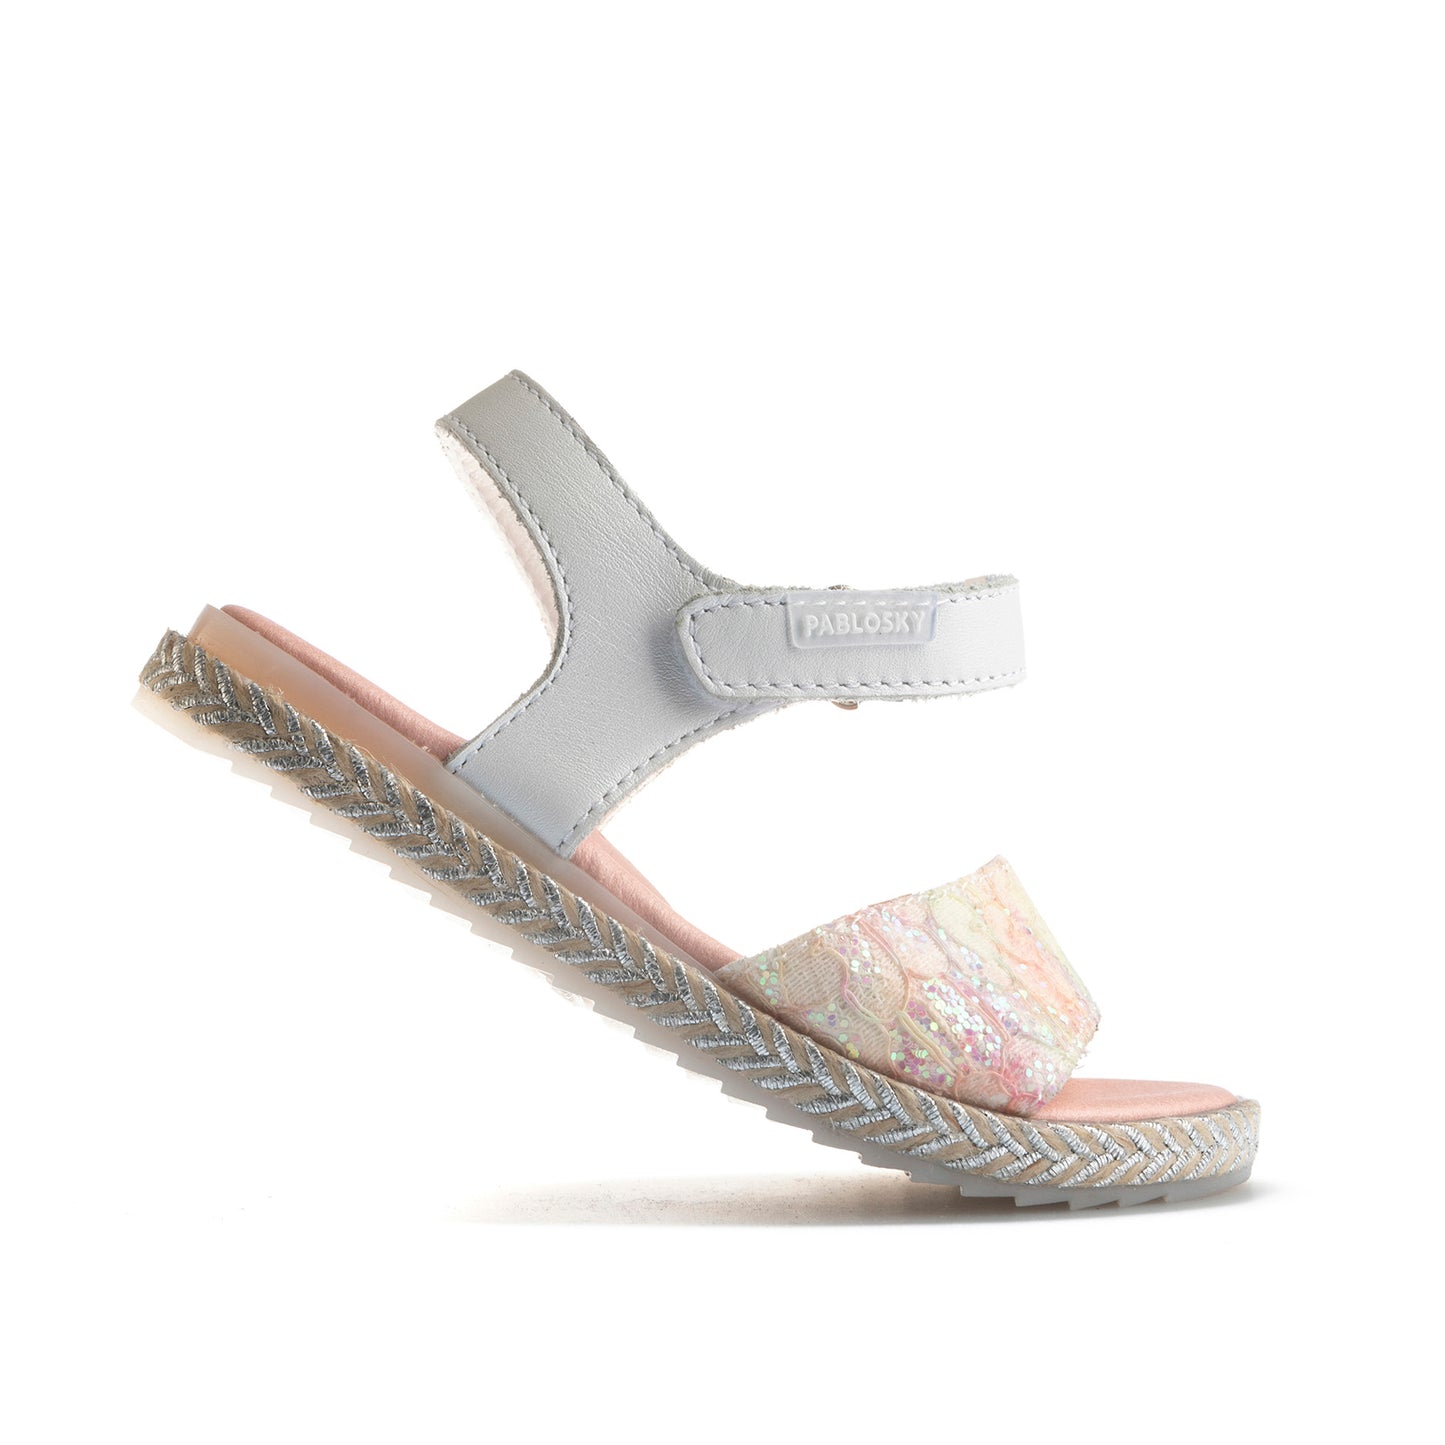 Pablosky Glitter Sandals / 420908